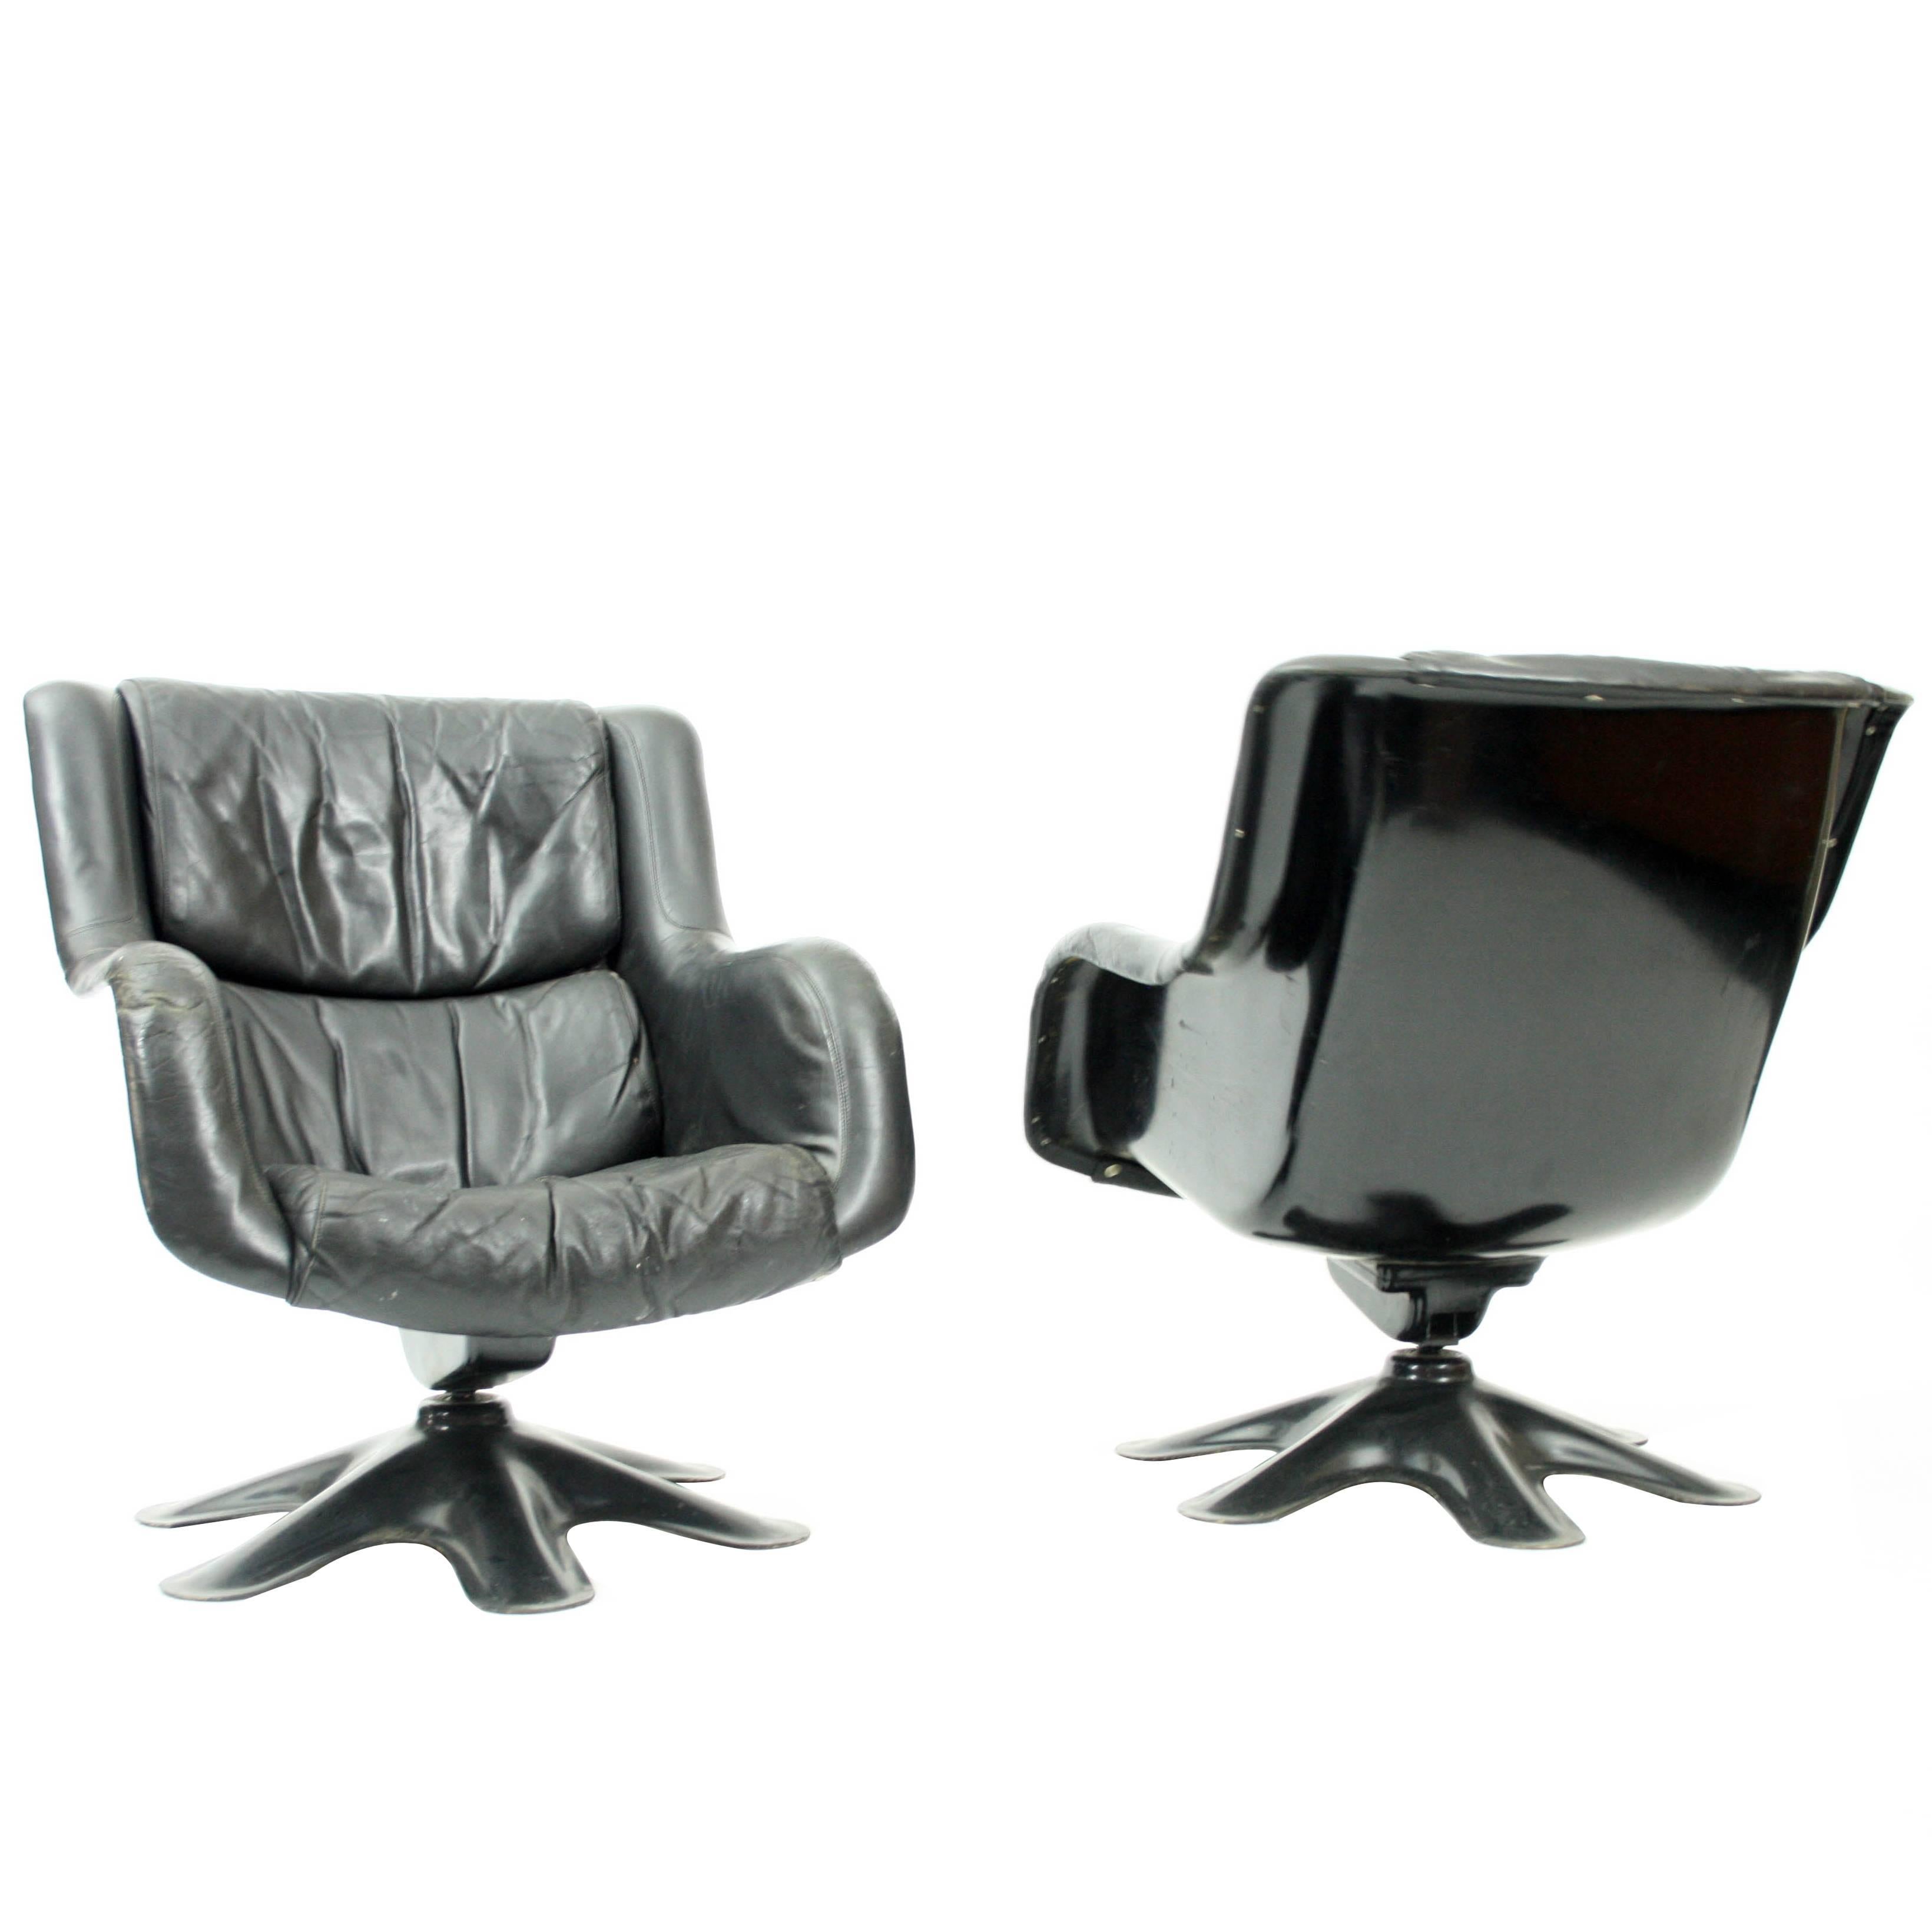 Pair of Leather Yrjö Kukkapuro "Kaeuselli" Lounge Chairs Haimi, Finland